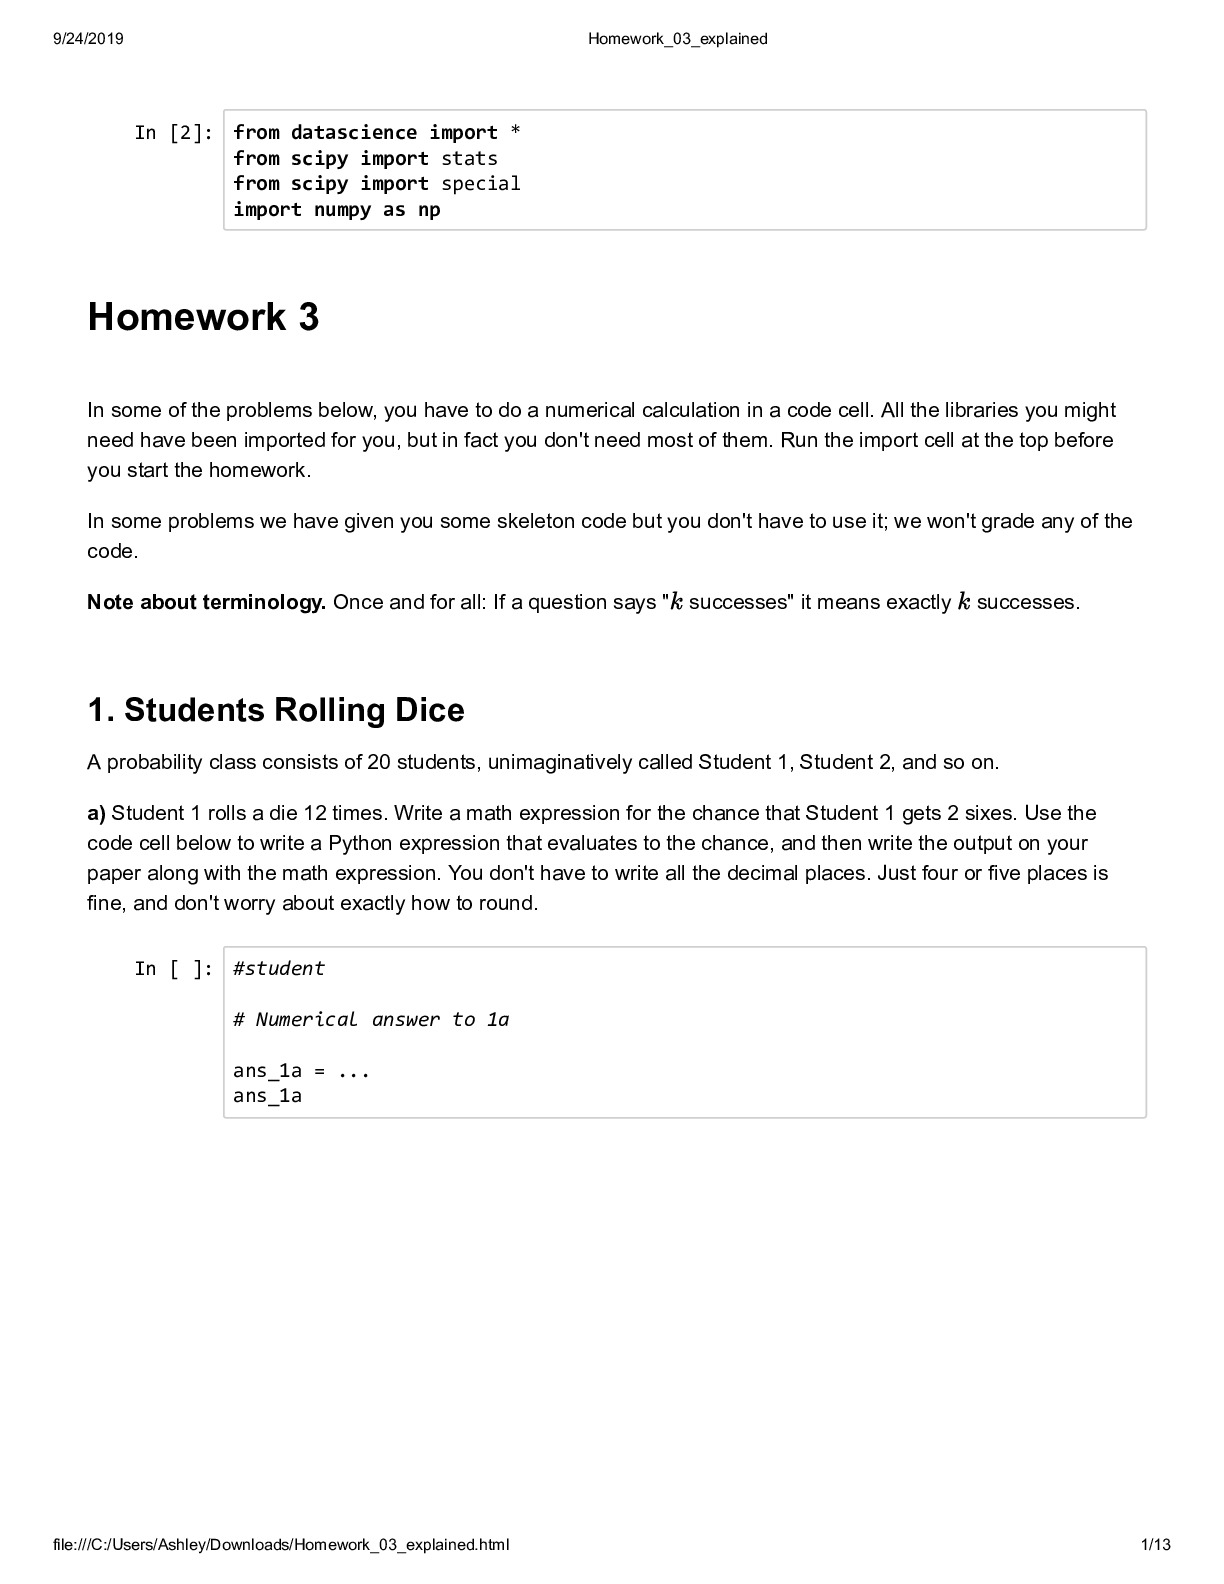 hw3_explained_sol.pdf